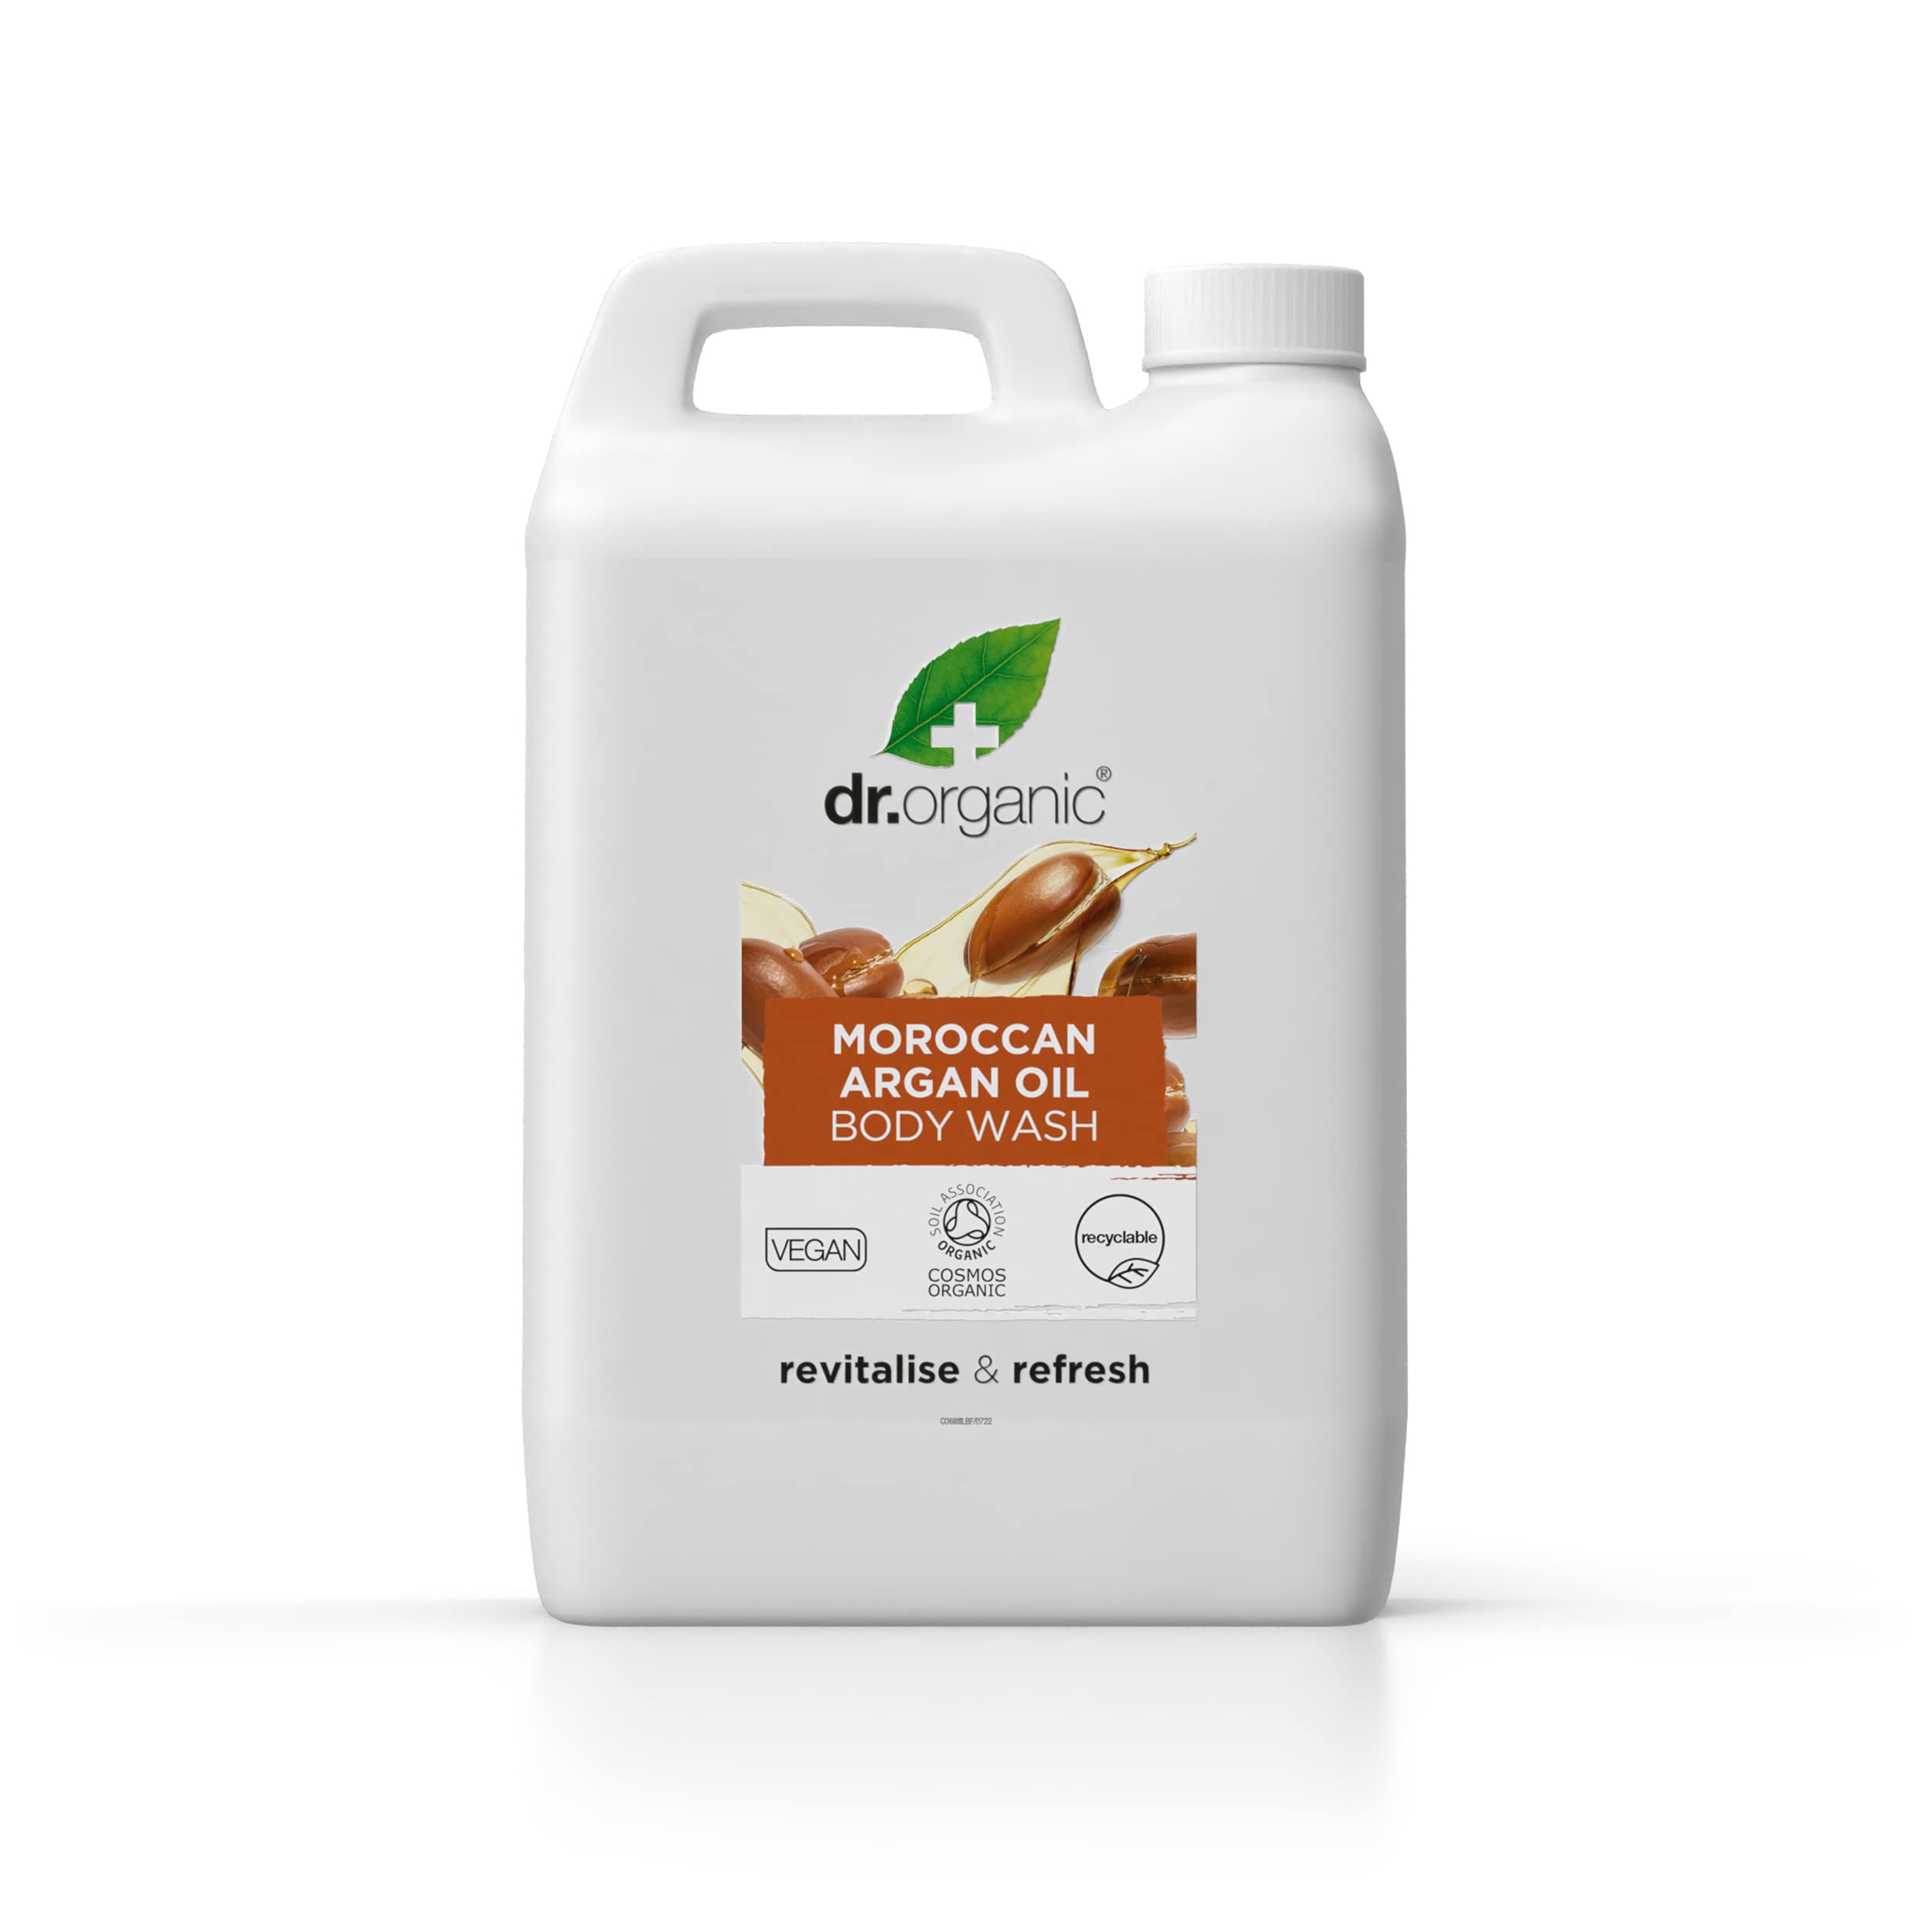 Dr Organic Marokkanisches Arganöl Körperwaschgel Nachfüllpack mit Pumpe, Duschgel, Natürlich, Vegan, Tierversuchsfrei, Paraben- & SLS-frei, Recycelt & Recyclebar, Zertifiziert Bio, 5L